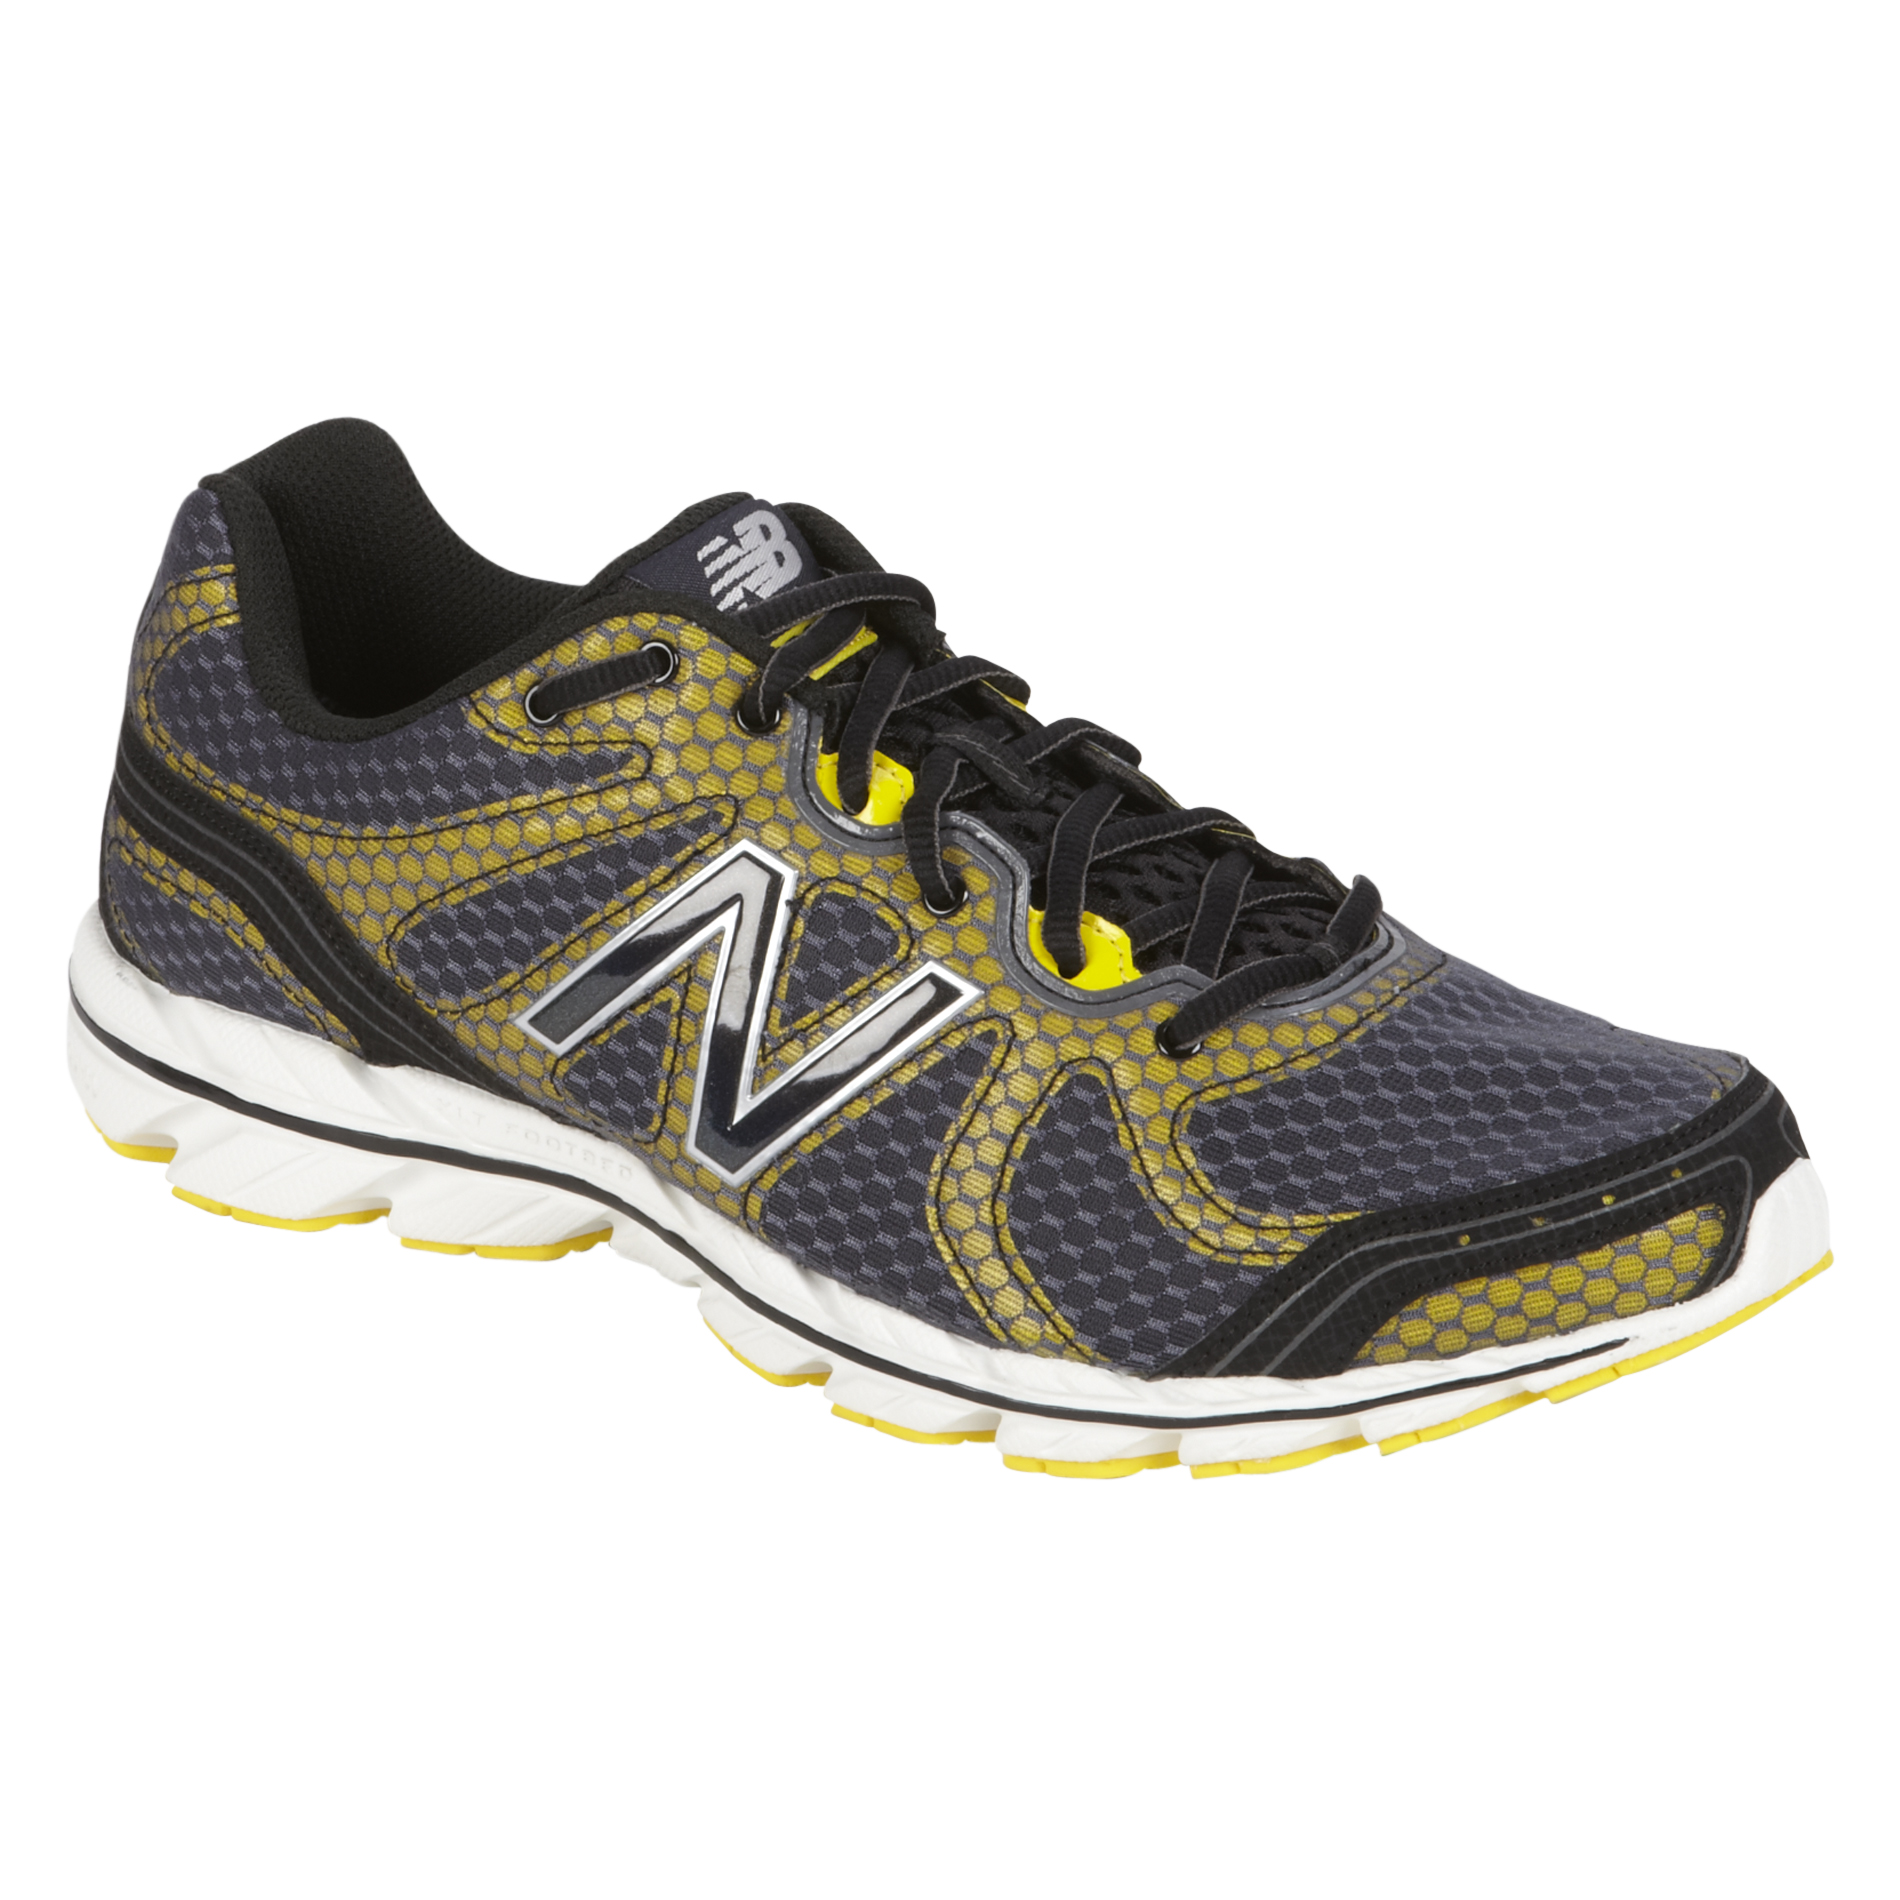 New Balance Men's 590 Running Athletic Shoe- Grey/Yellow